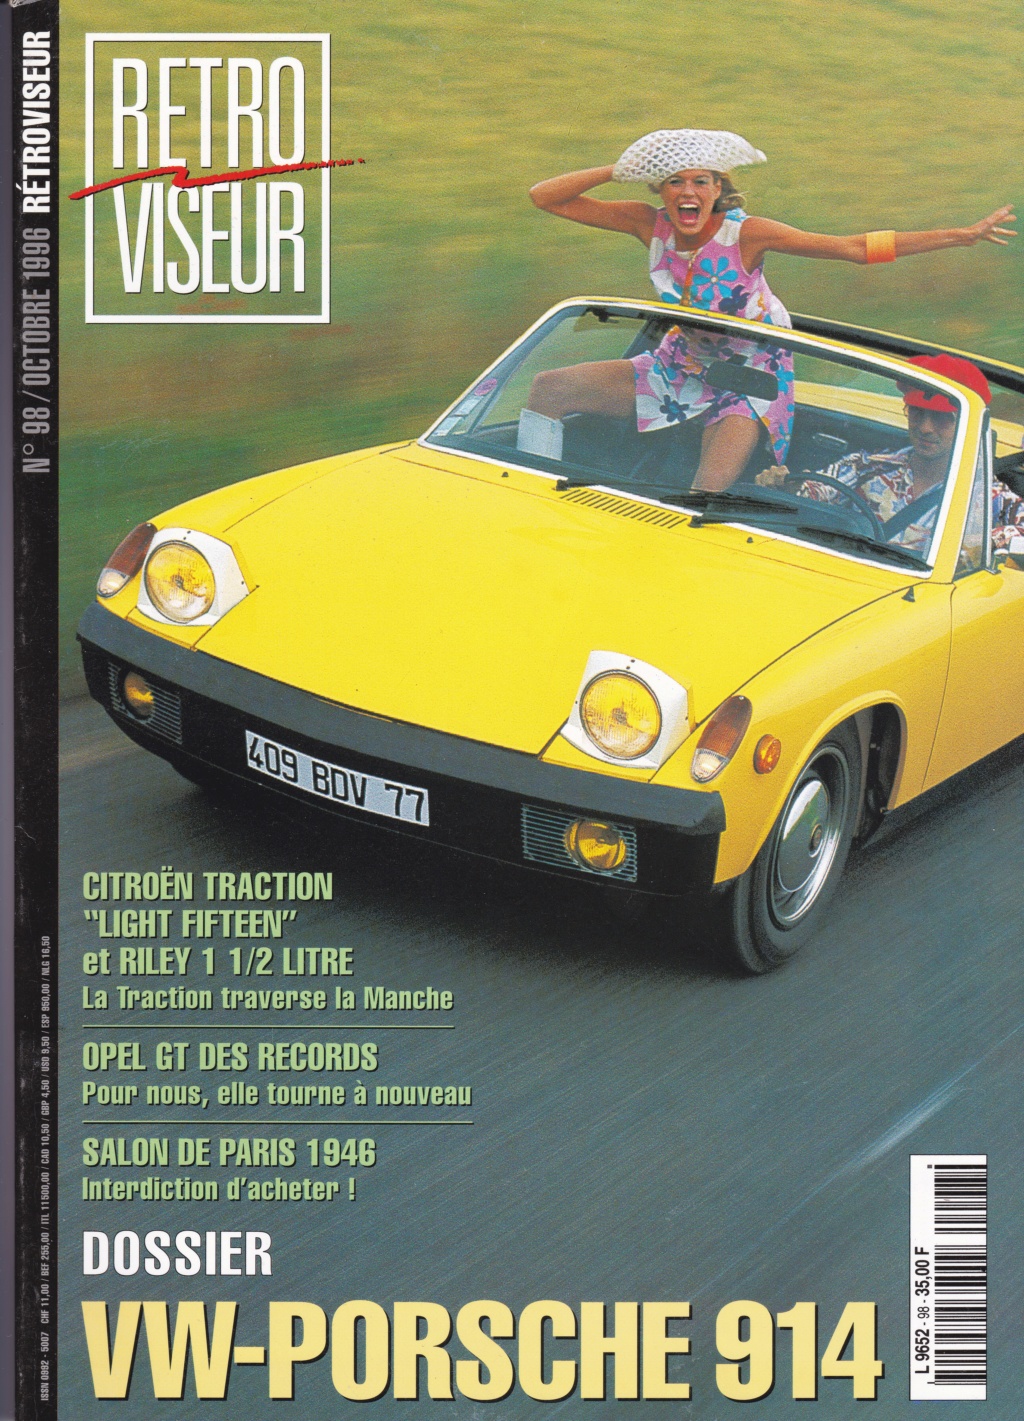 Porsche 914 magazine Retroviseur octobre 96 Img_2016